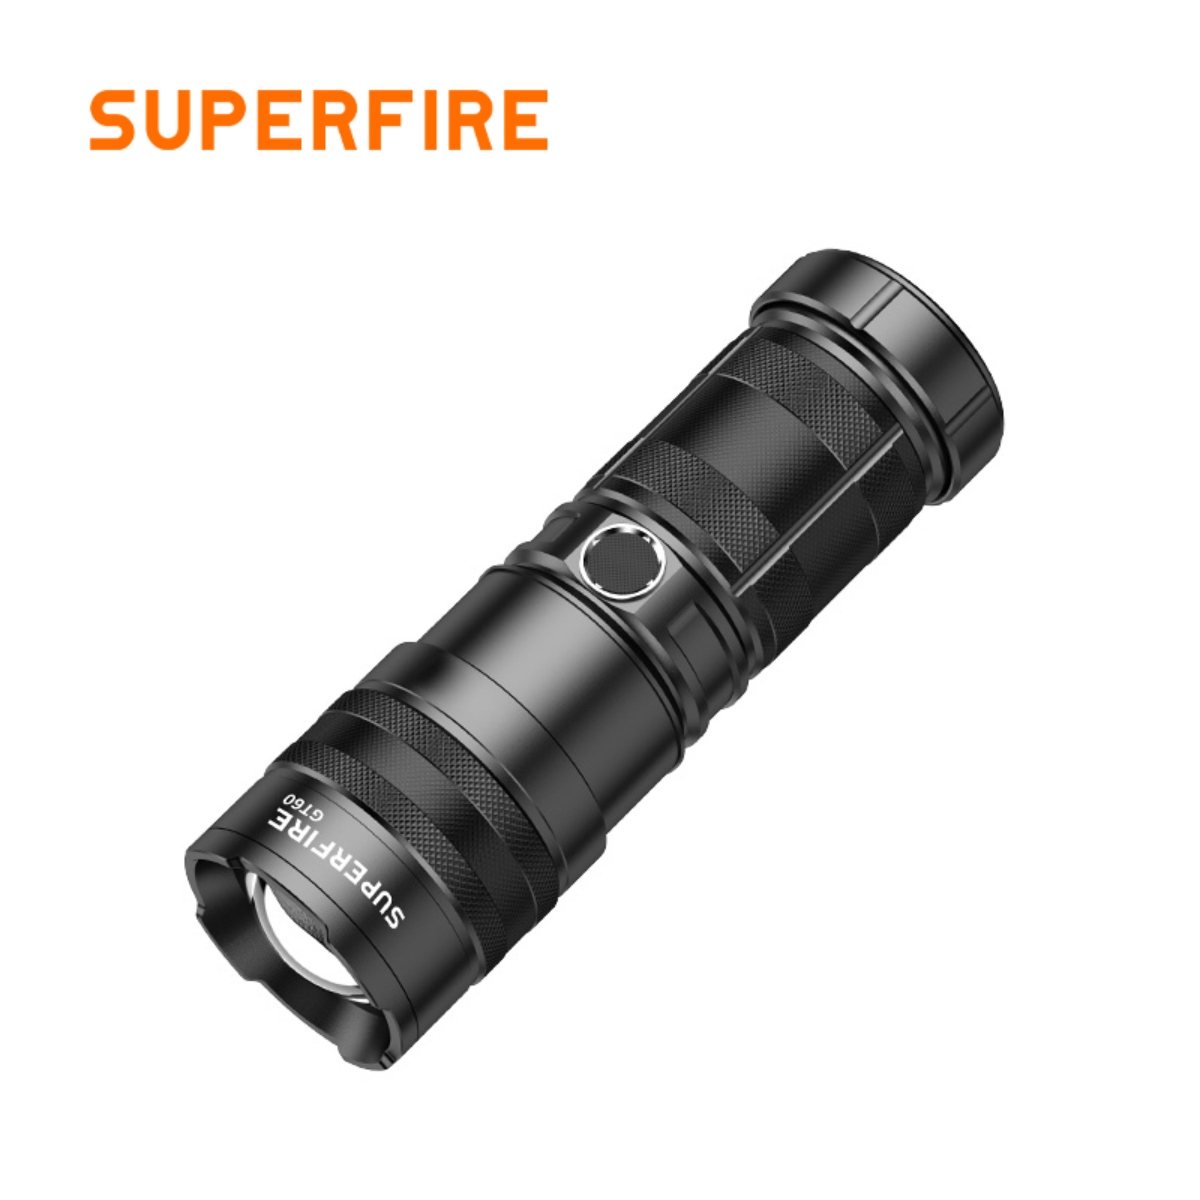 SUPERFIRE GT60 Zoom high power flashlight